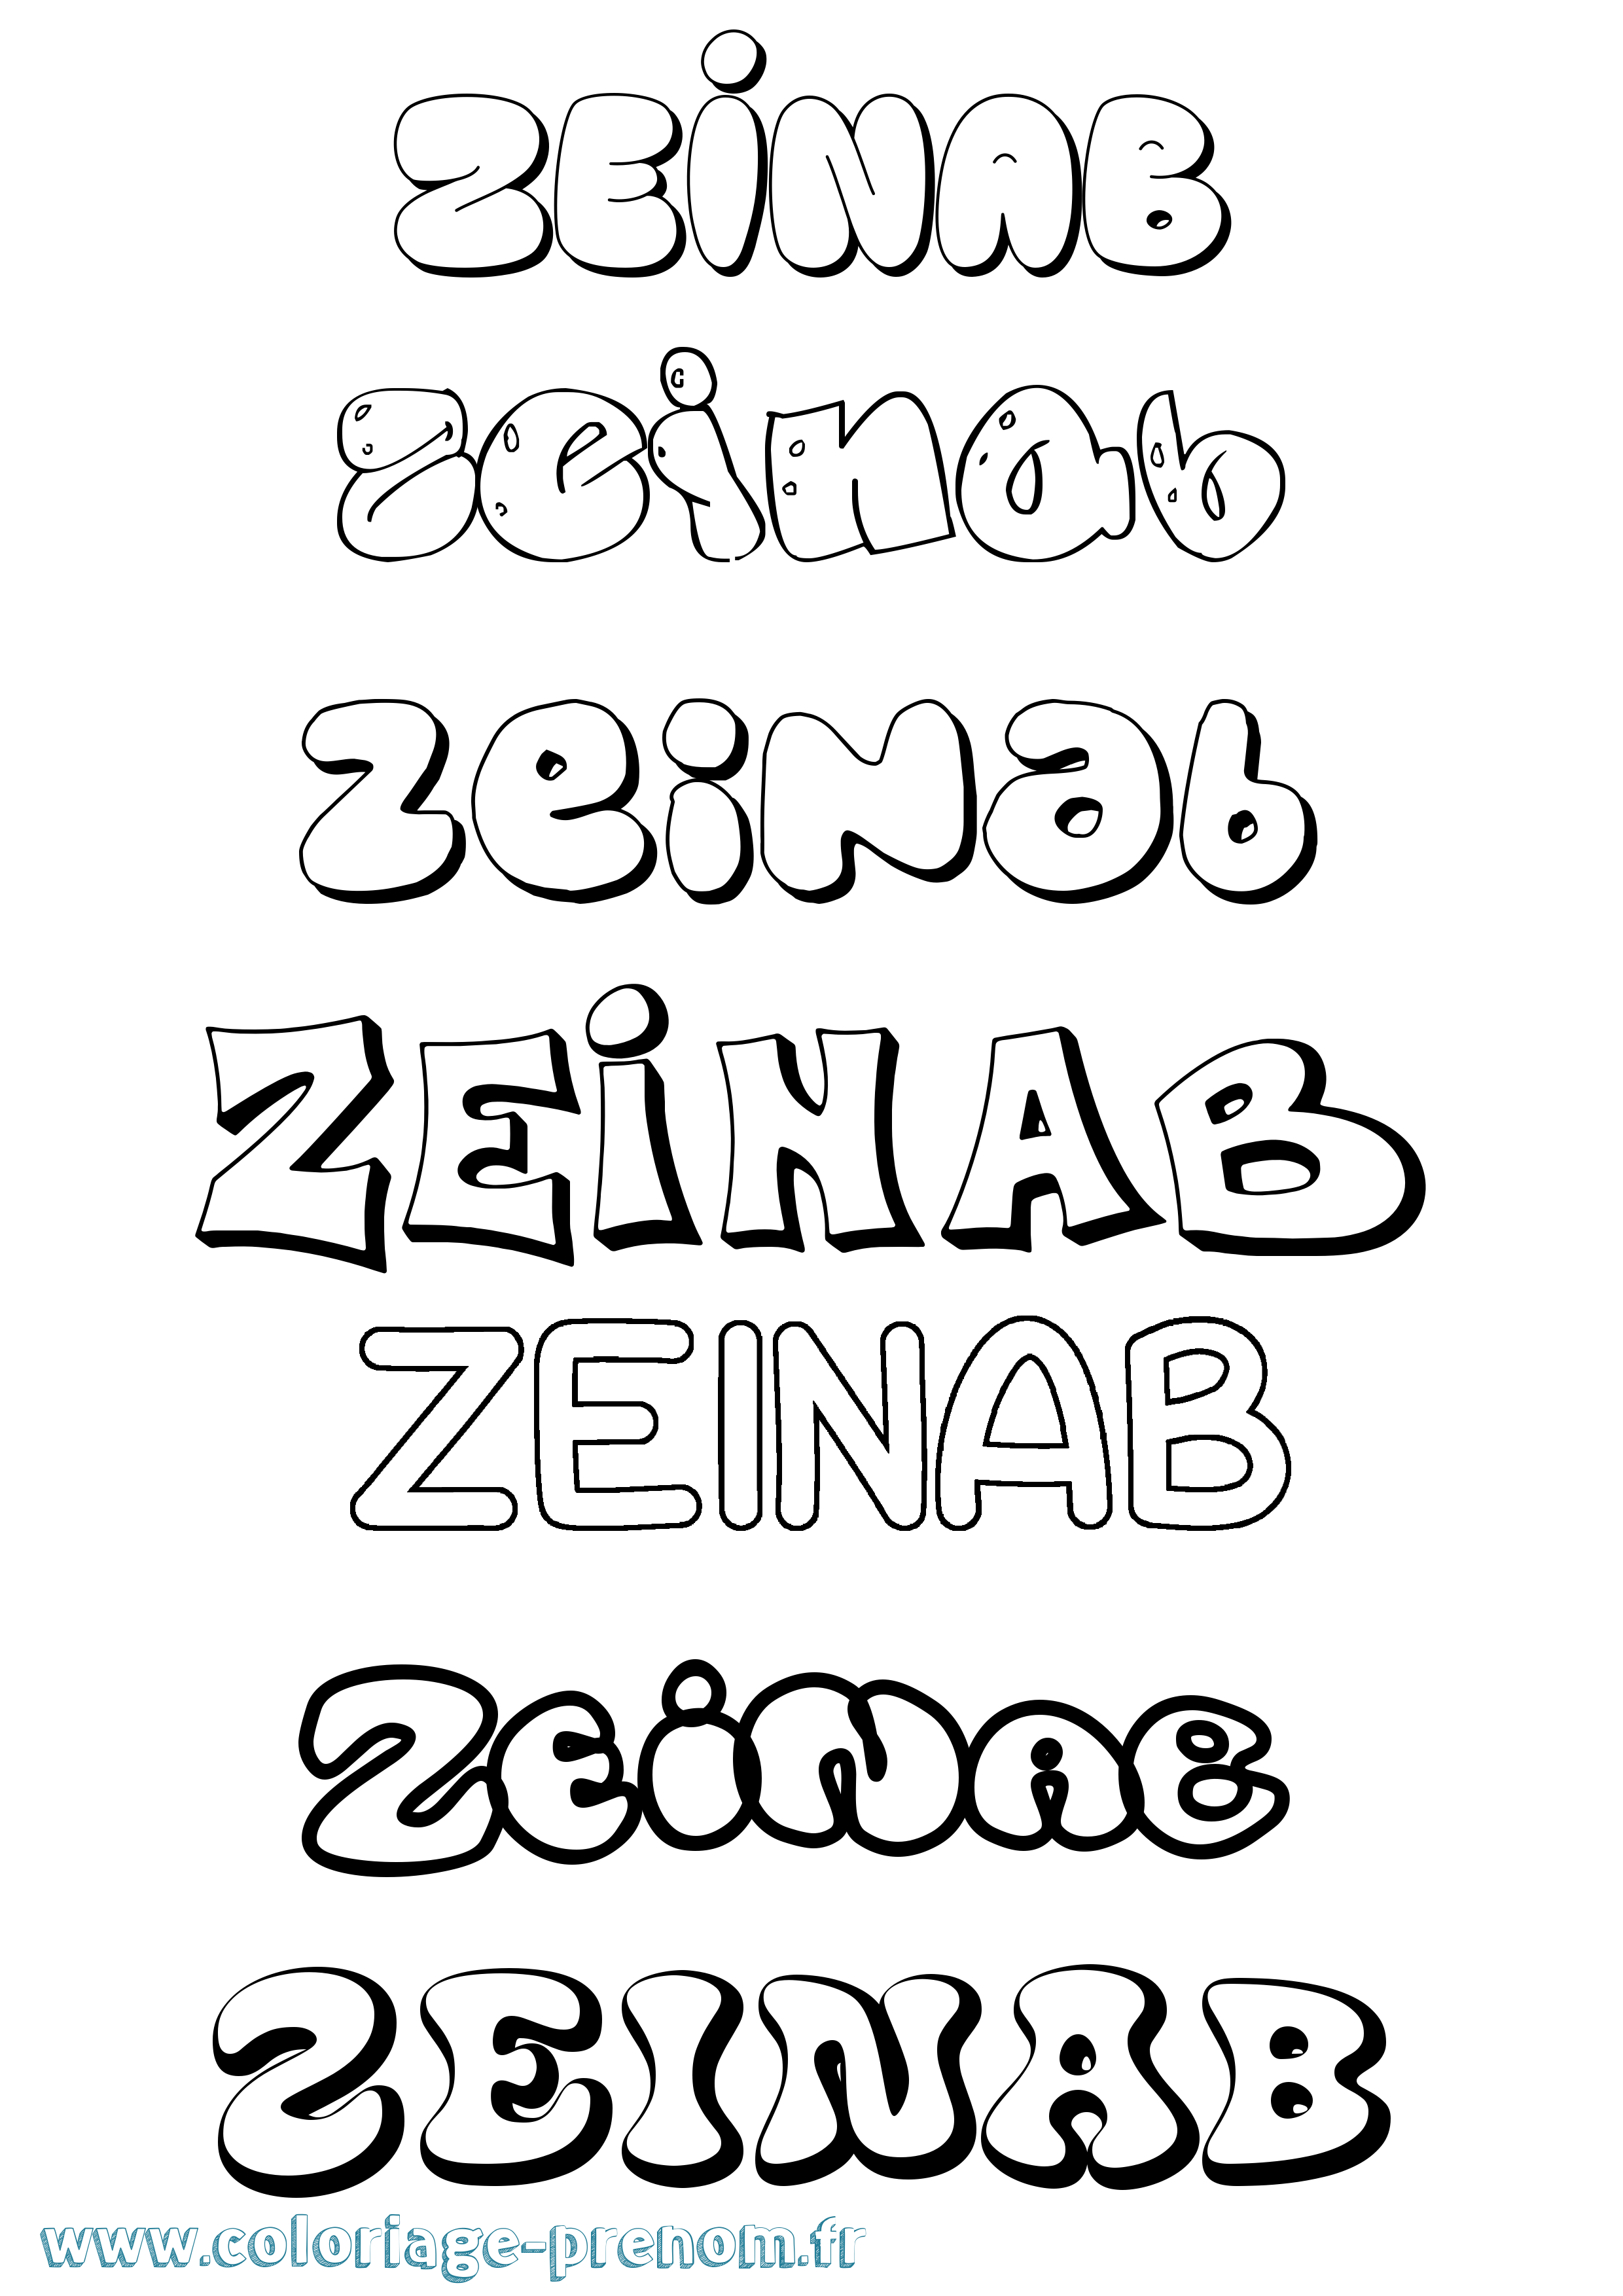 Coloriage prénom Zeinab